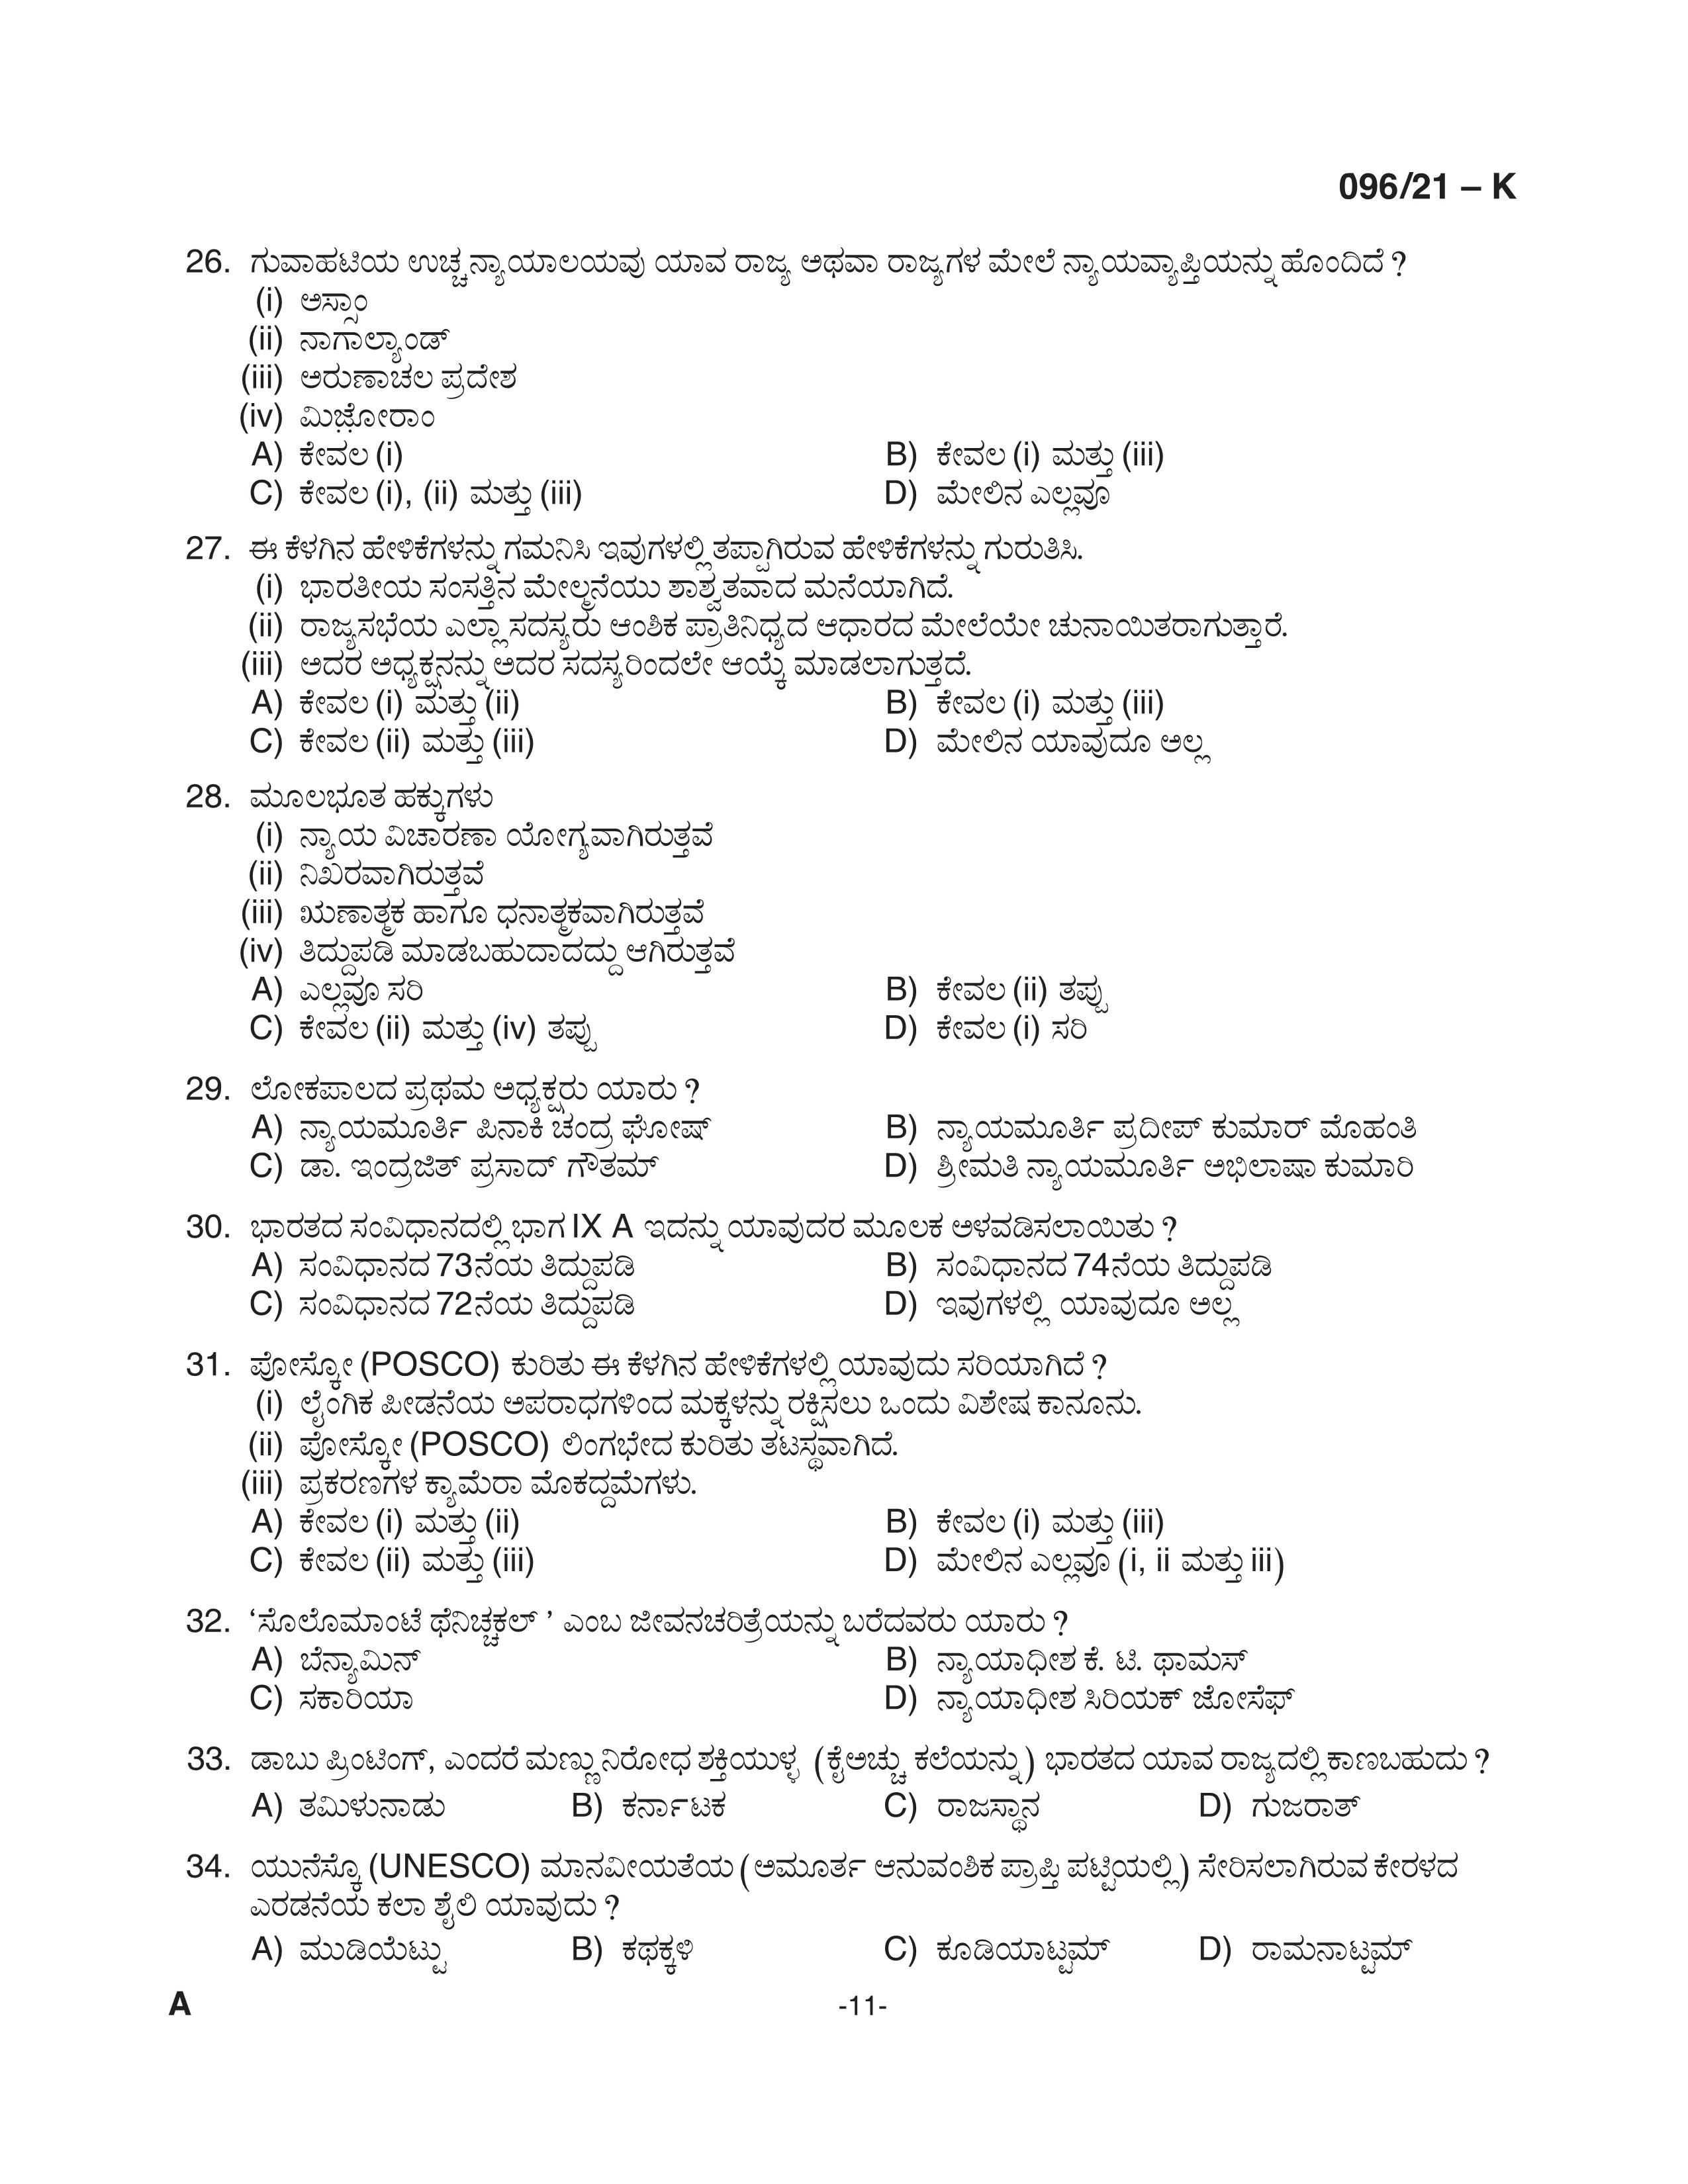 KPSC Degree Level Preliminary Exam Stage II Kannada 2021 Code 09621 K 11